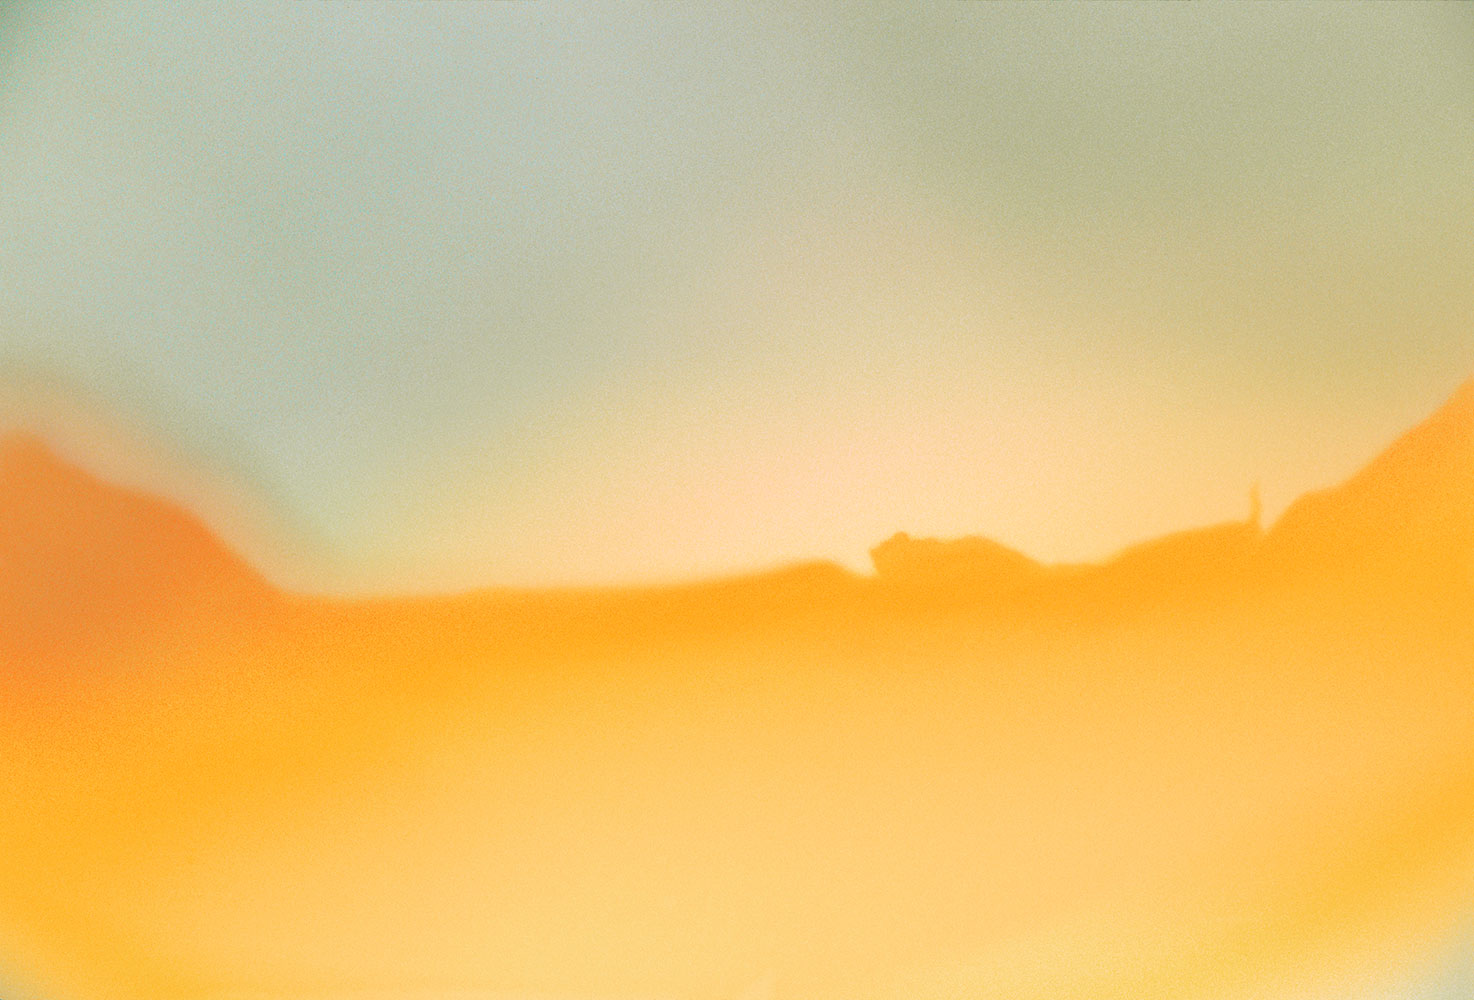 e-minor:    Mojave    wildflower    sunset   horizon    teal   burnish    watercolor   serene    grace     abstract